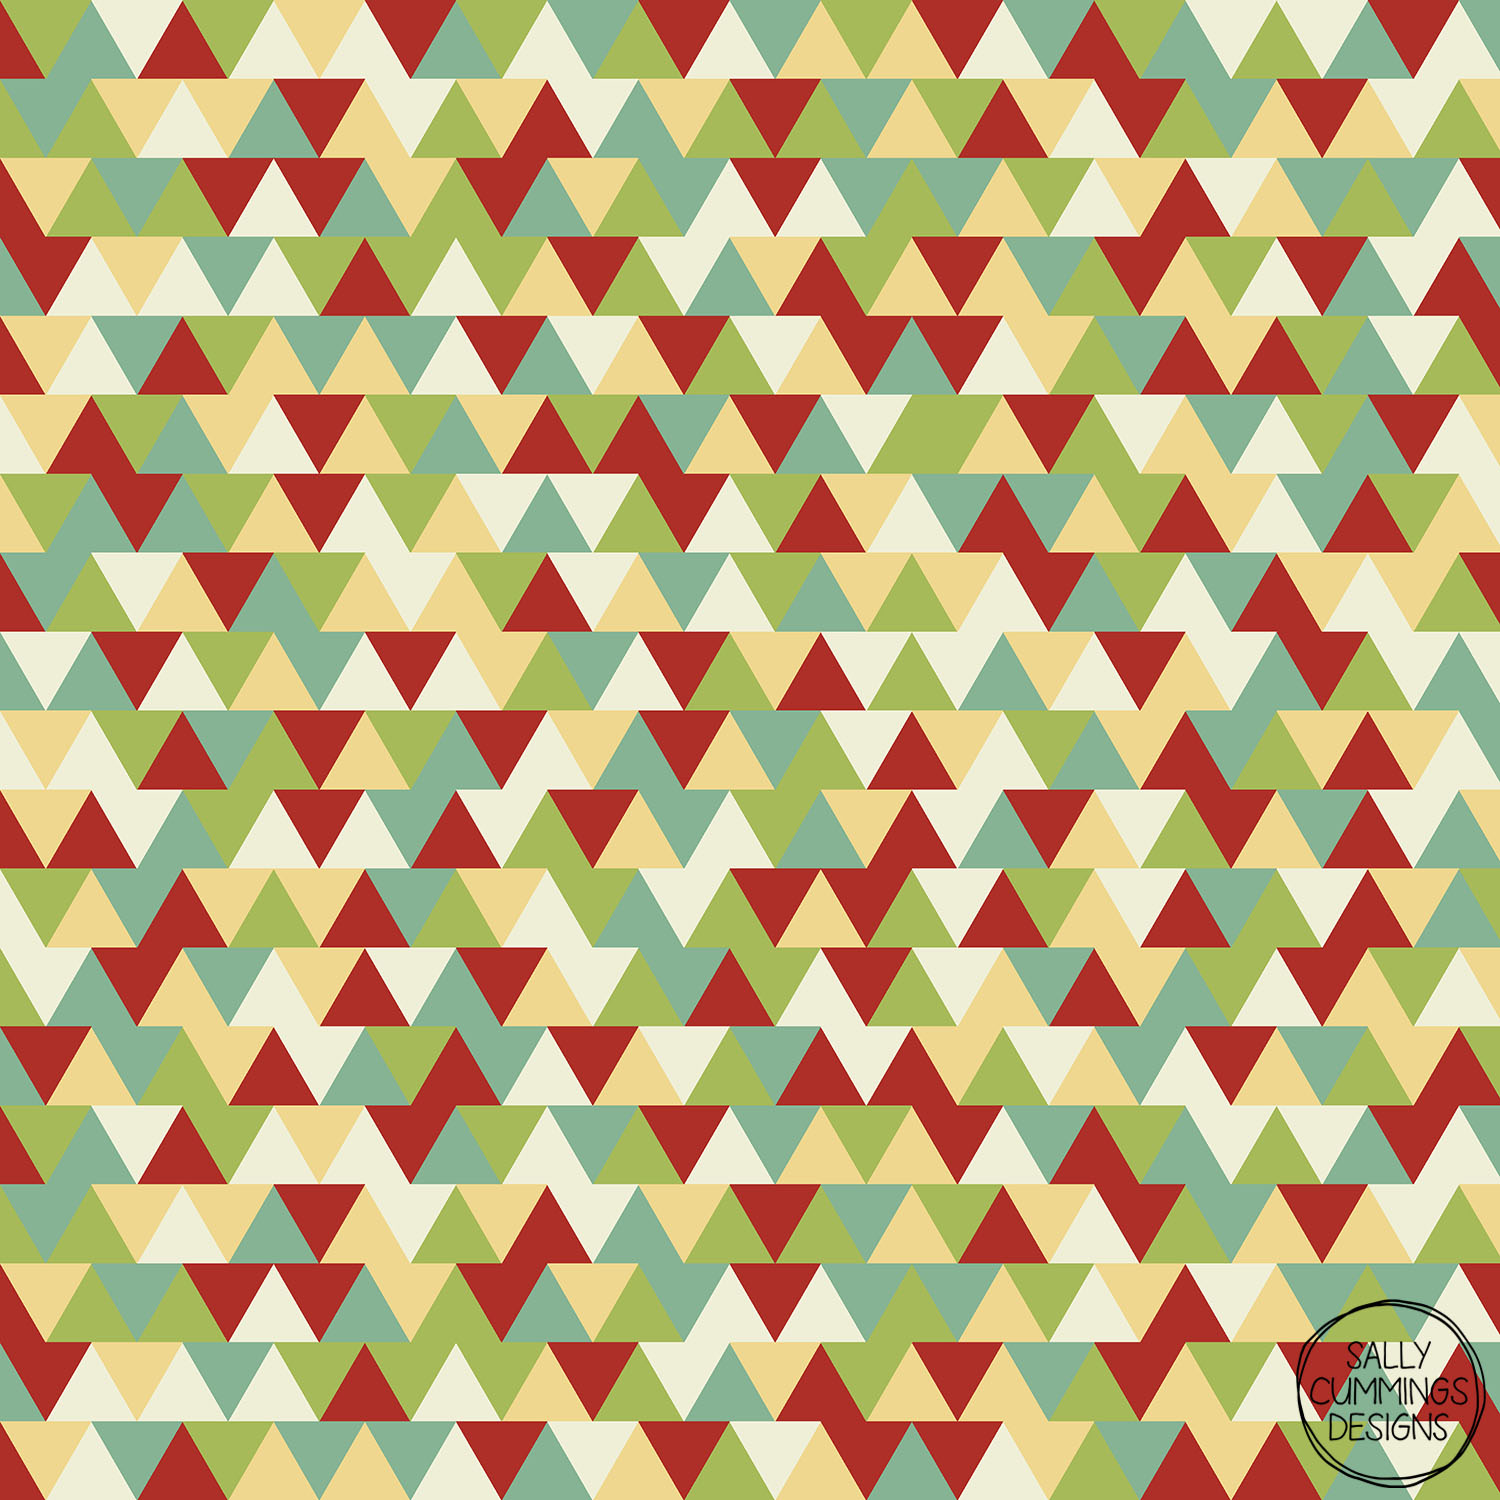 Sally Cummings Designs - Retro Christmas Triangles Pattern